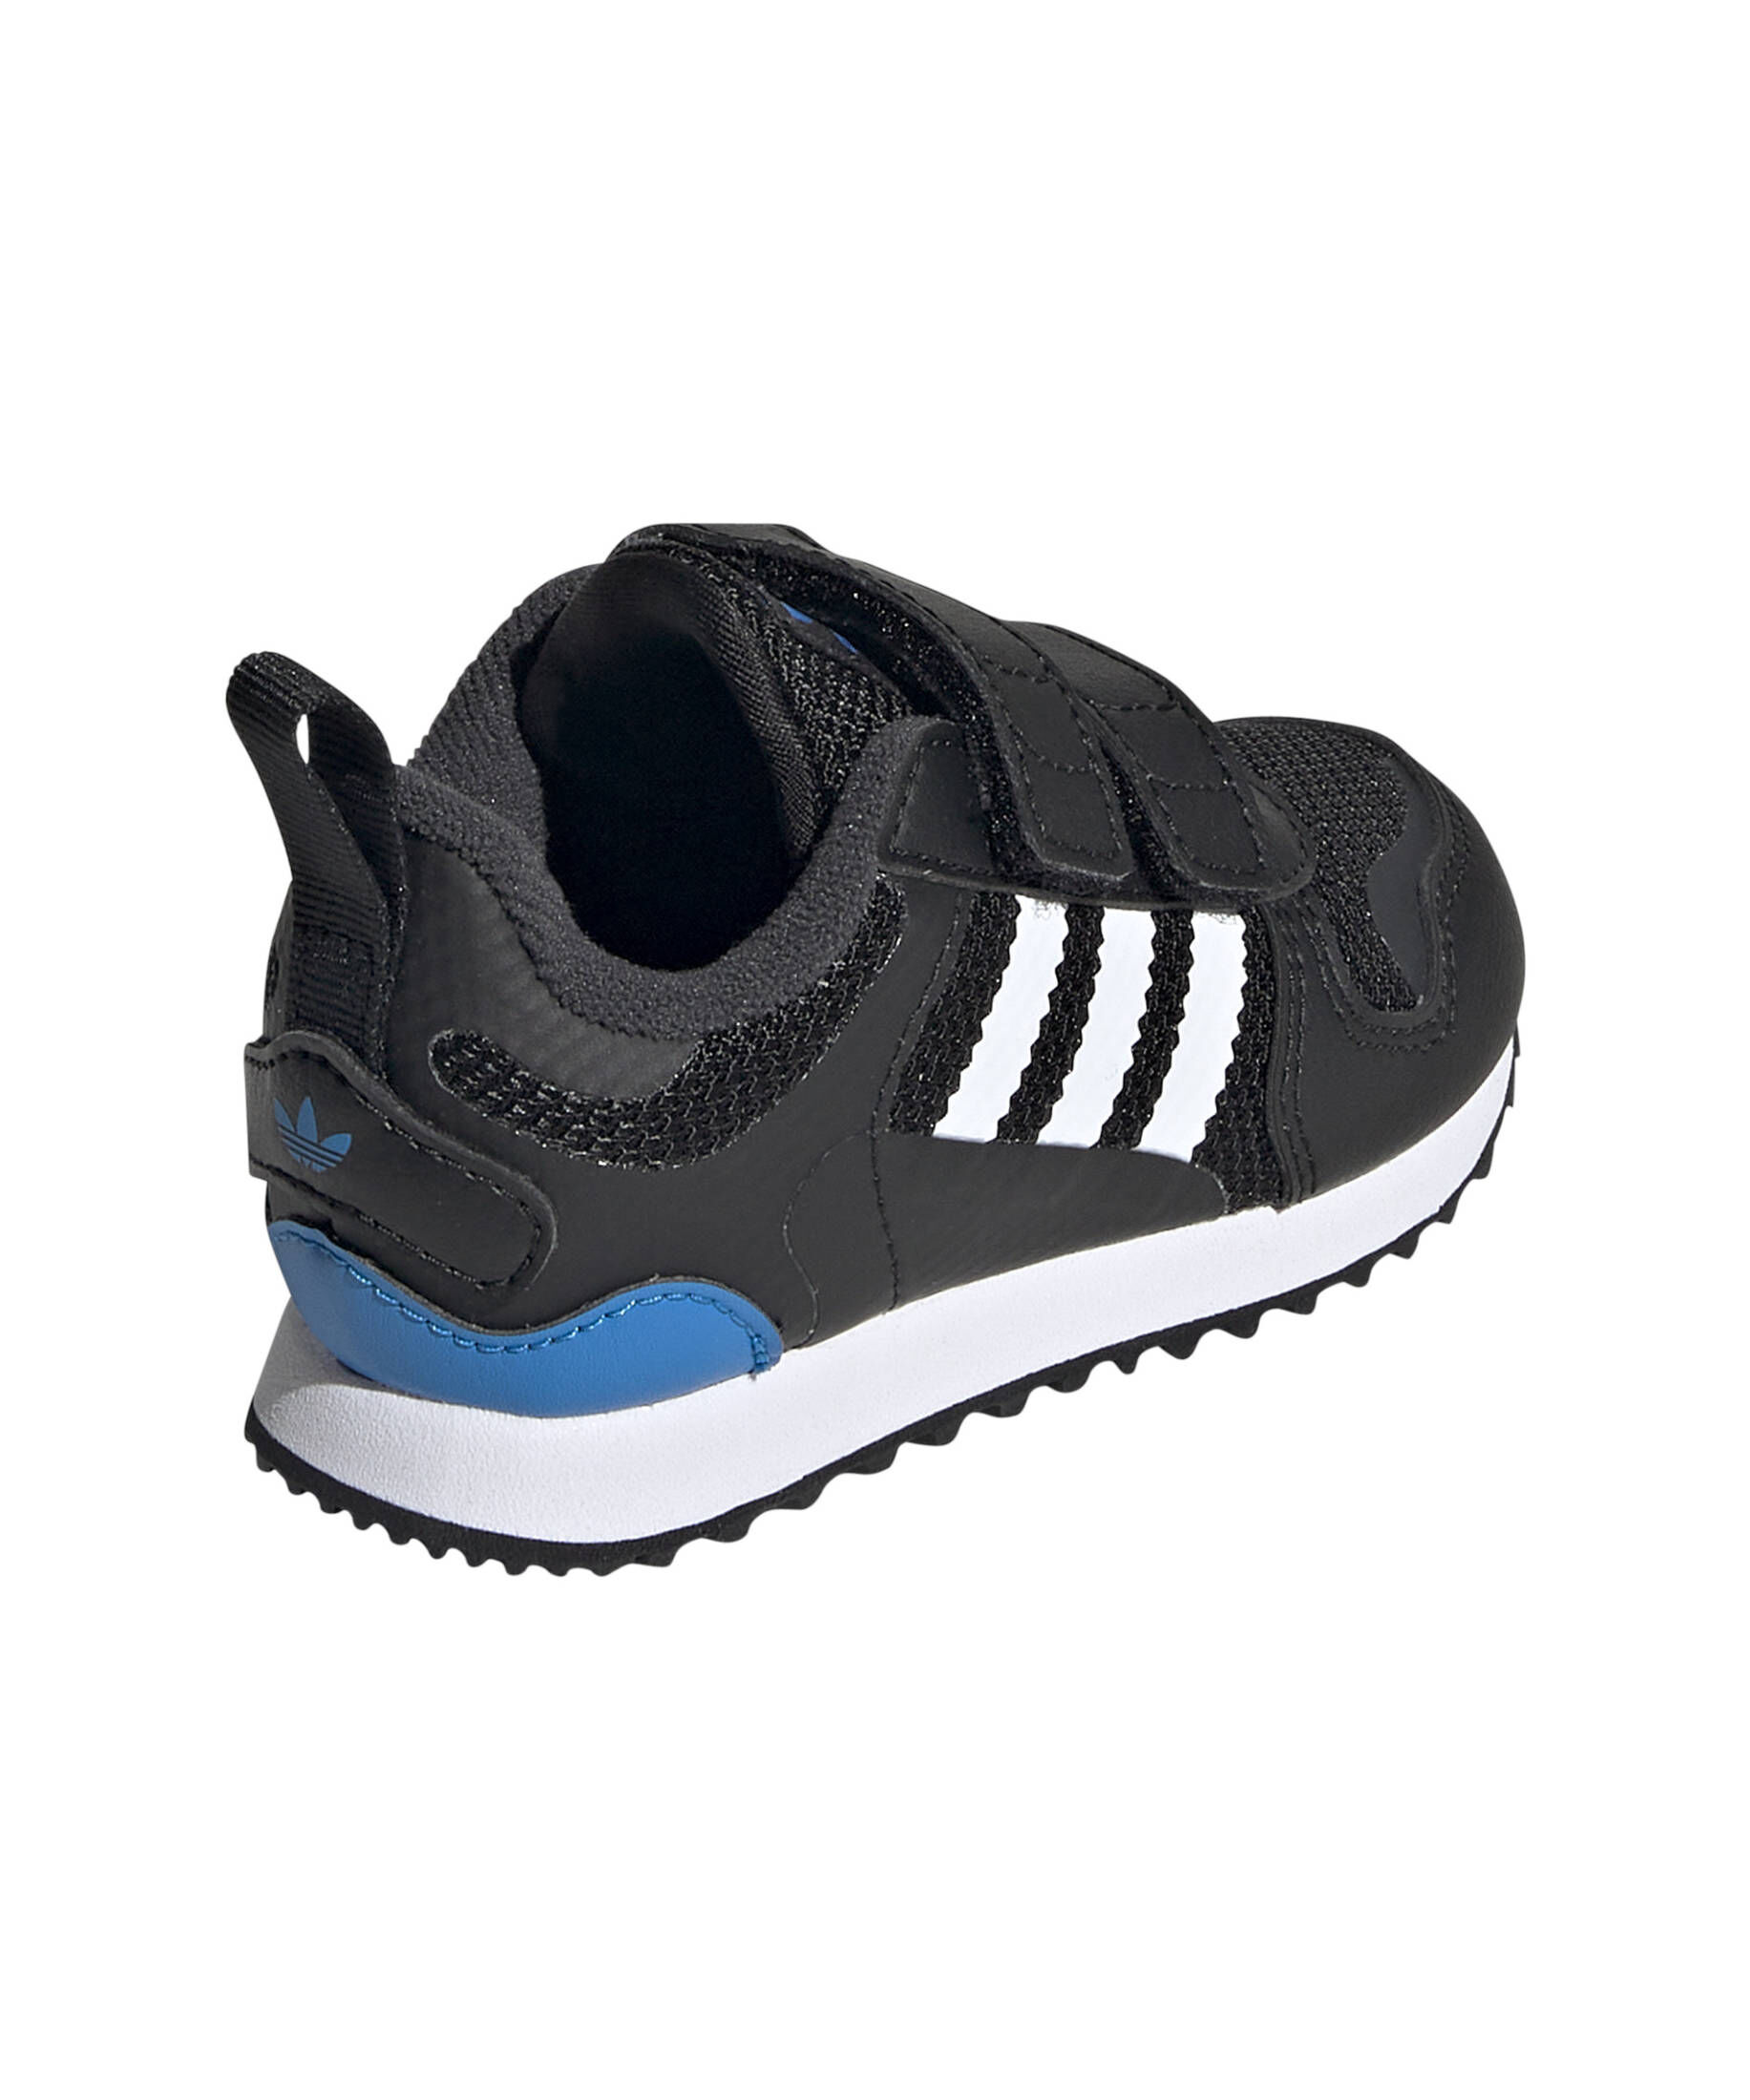 Onzuiver bedrijf paniek adidas Performance Kinder Lifestyle - Schuhe Kinder - Sneakers ZX 700 Kids  (I) kaufen | engelhorn